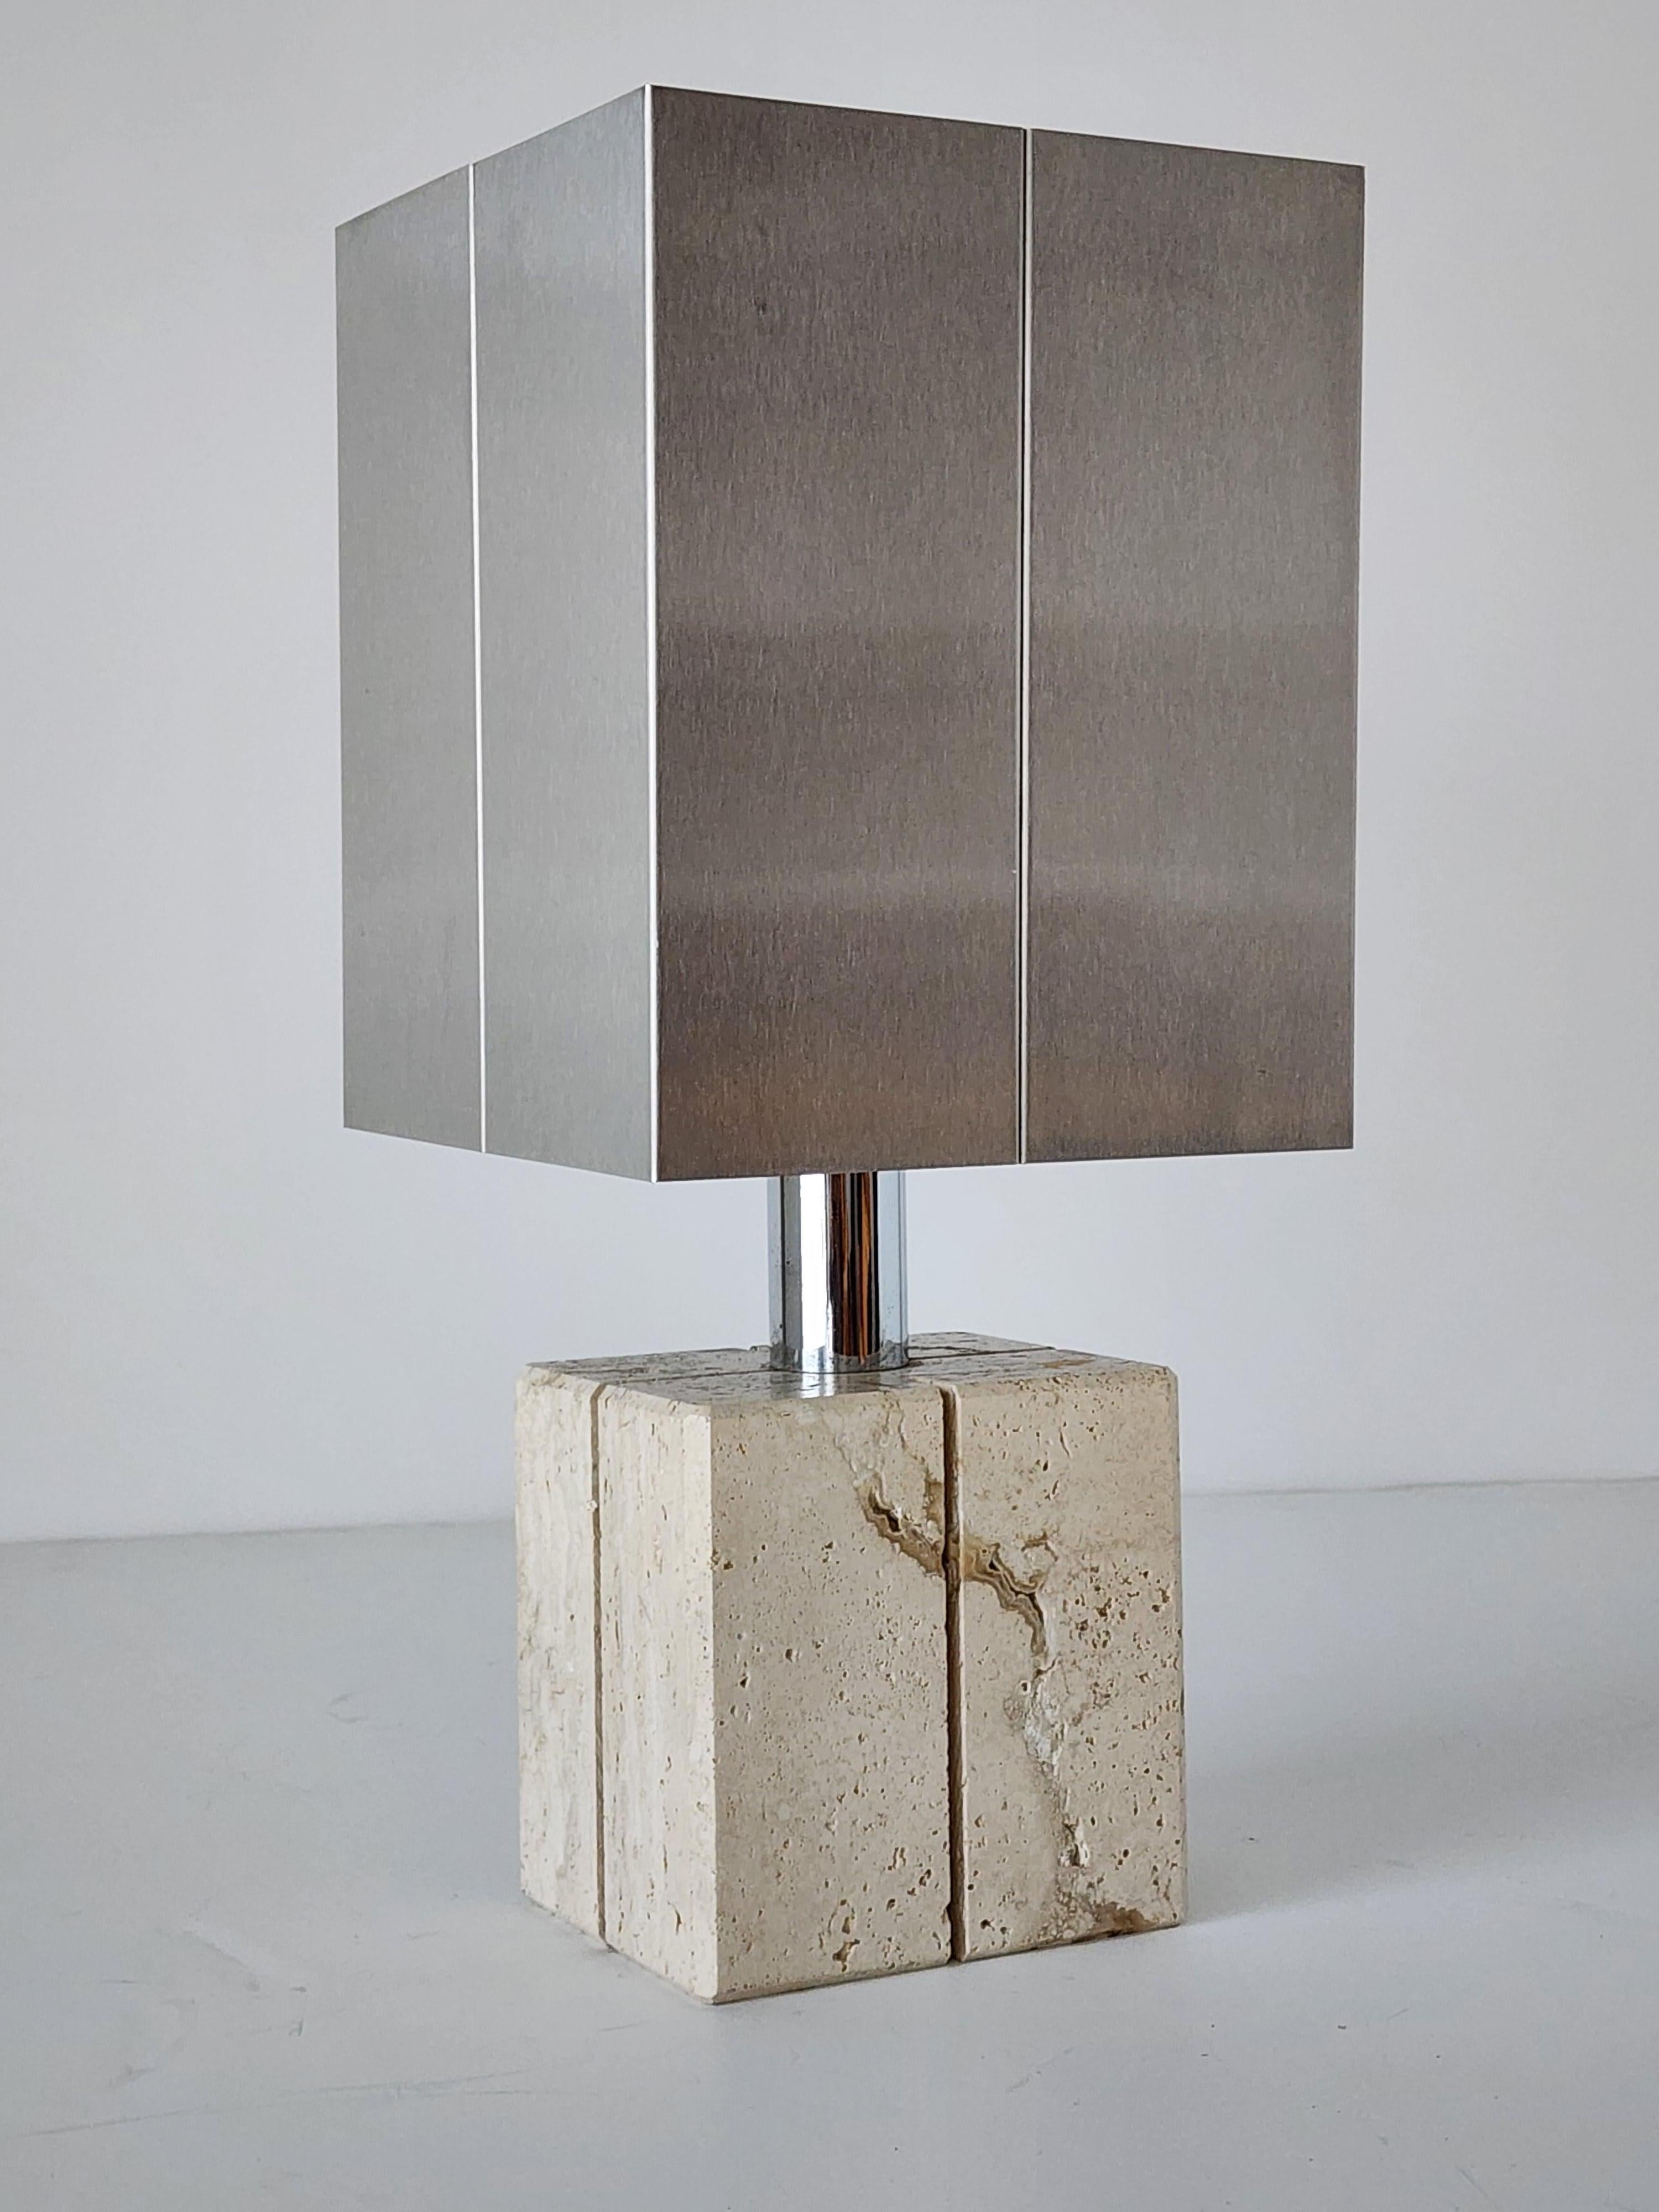 Fin du 20e siècle 1970s  Lampe de bureau Reggiani en travertin et acier inoxydable, Italie  en vente